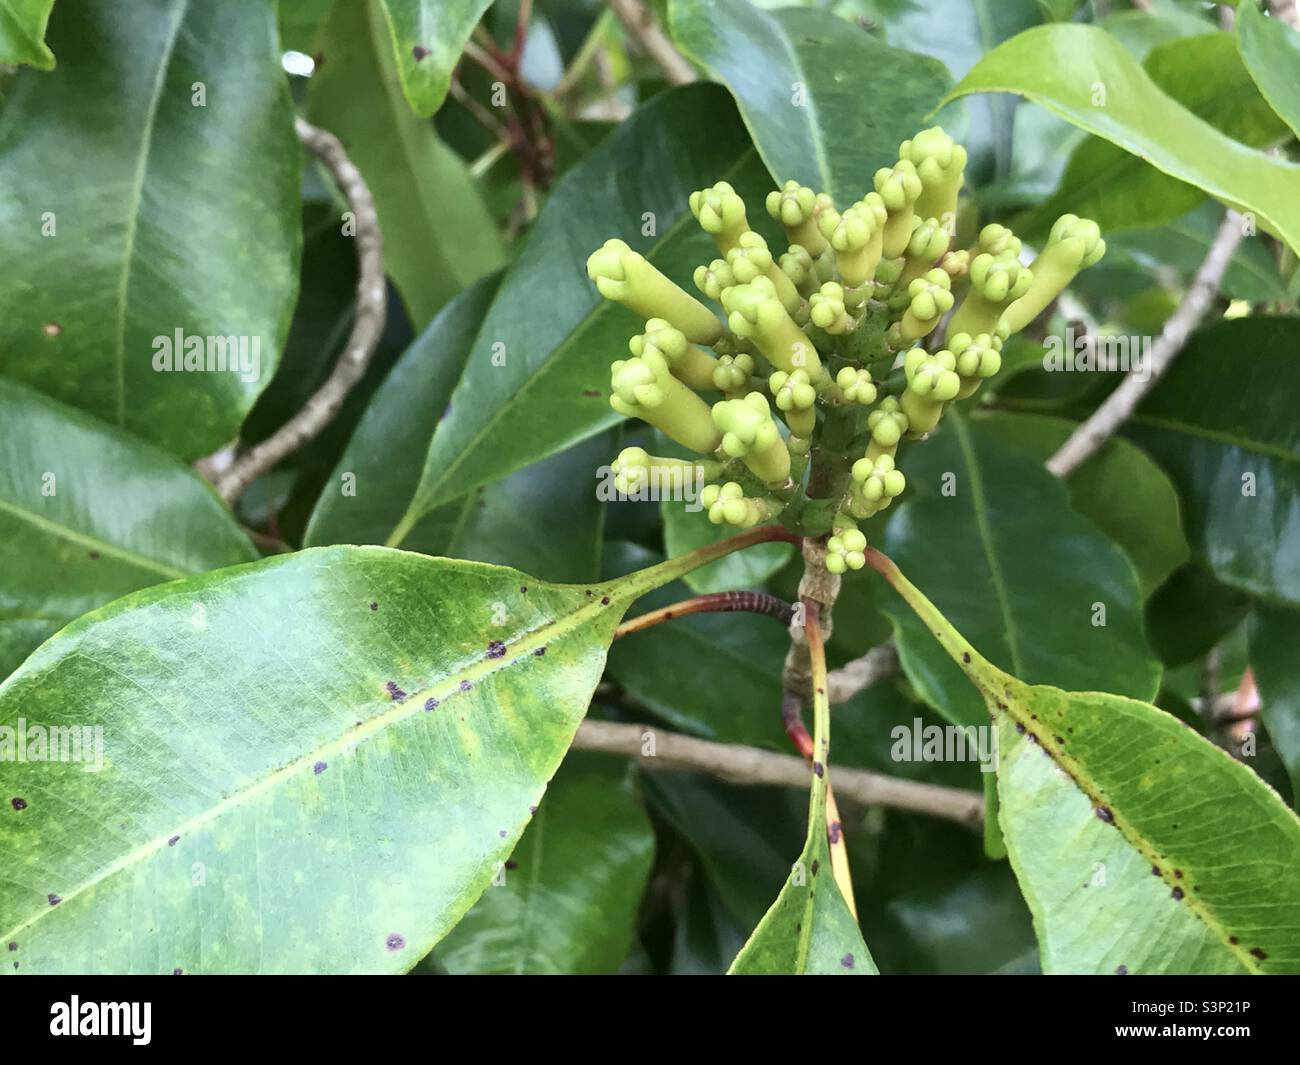 Cloves (Syzygium aromaticum): clove buds still growing from the tree Stock Photo